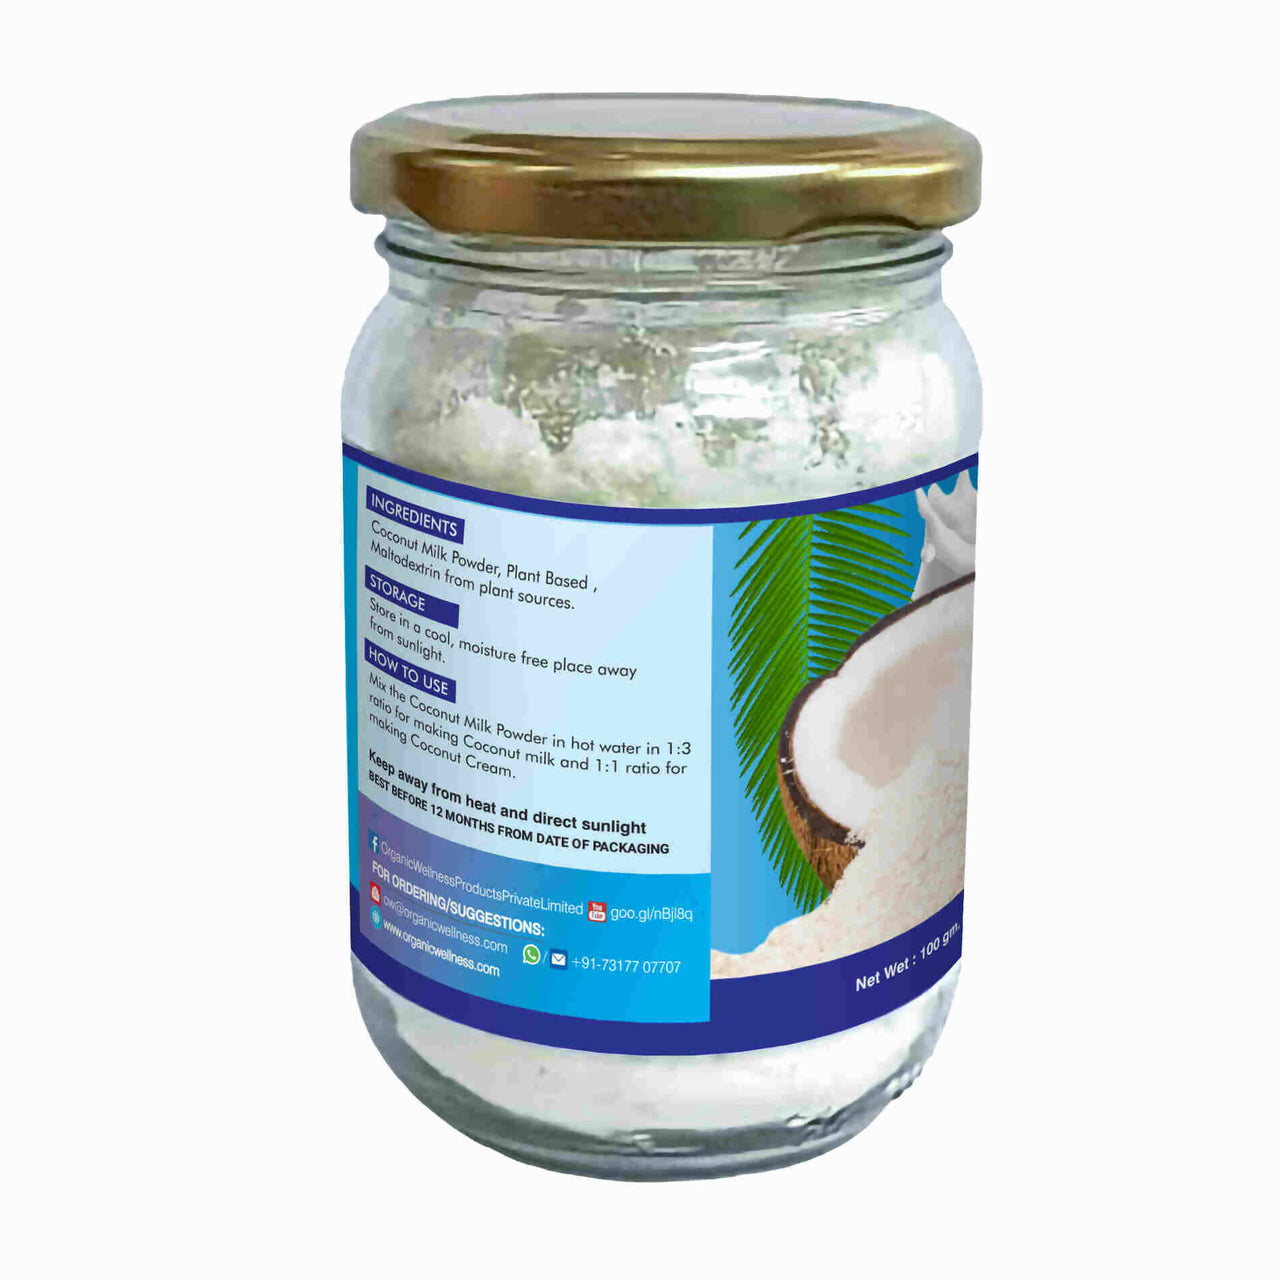 Organic Wellness Coconut Milk Powder - Distacart